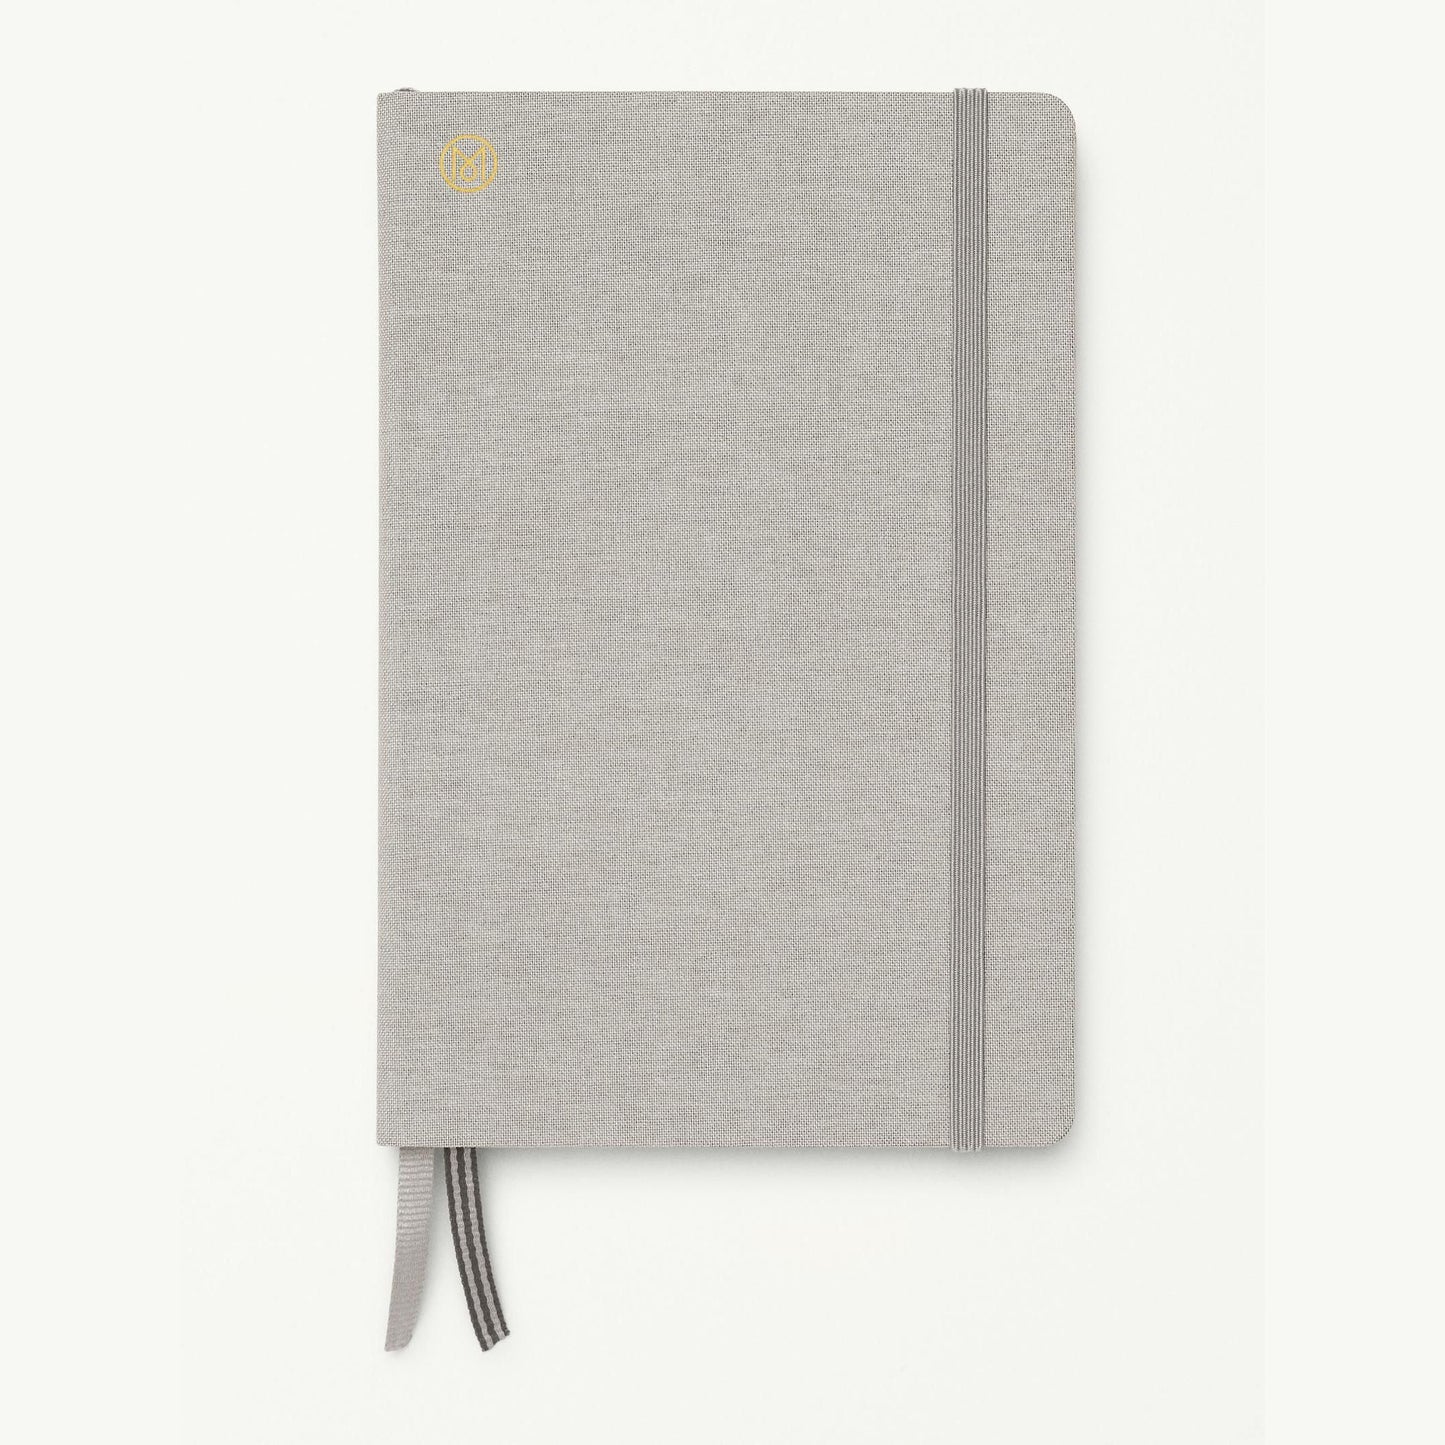 Monocle Hardcover Notebook B6 - Light Grey